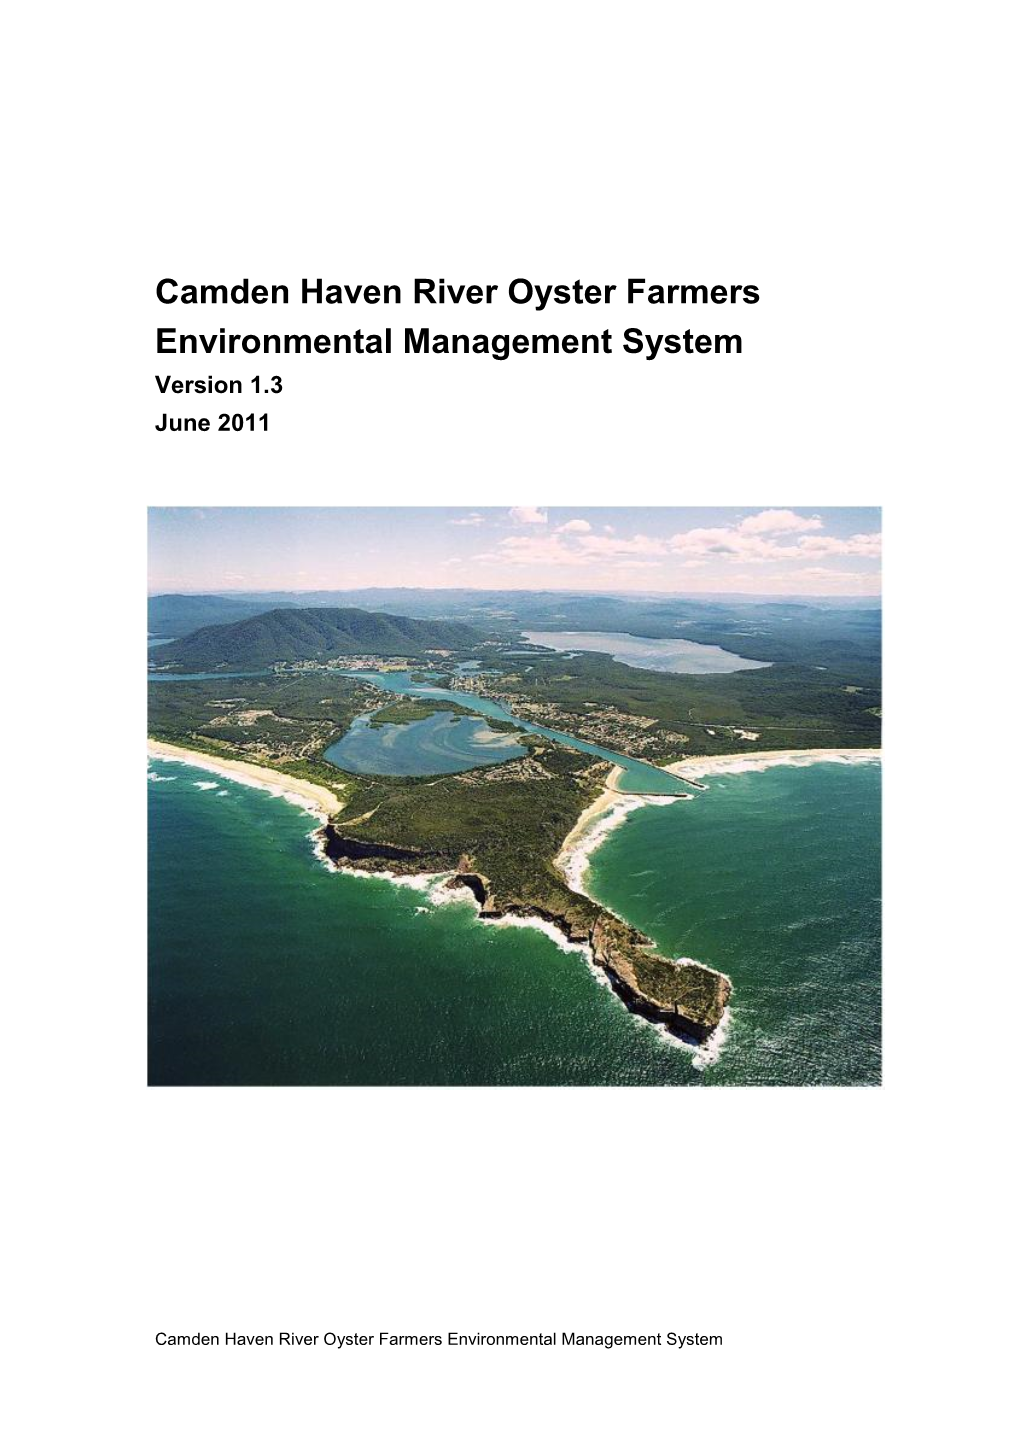 Camden Haven River Oyster Farmers Environmental Management System Version 1.3 June 2011